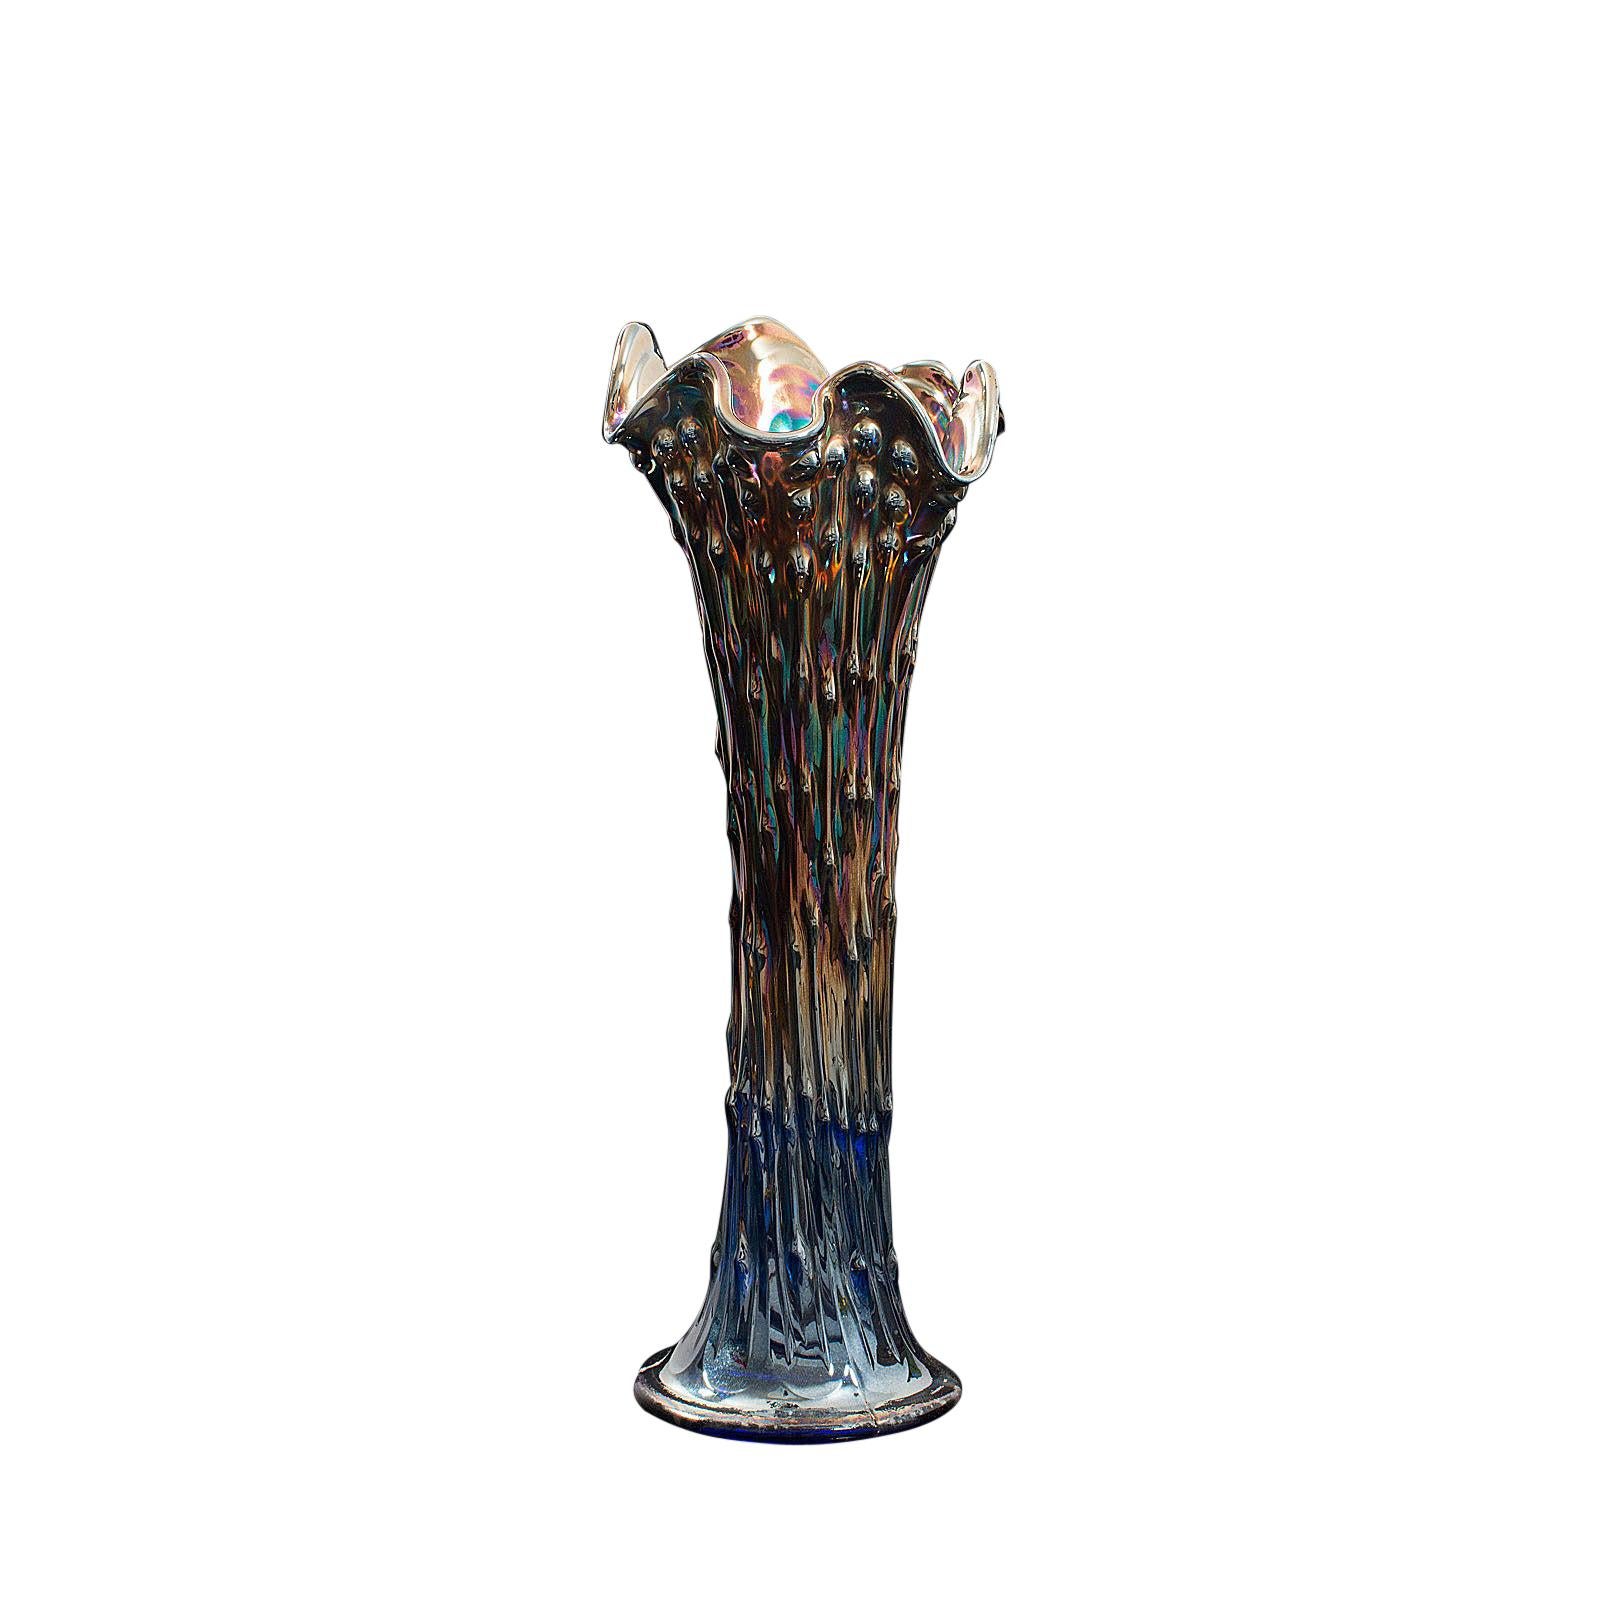 Tall Vintage Decorative Carnival Vase, English, Glass, Flower, Midcentury, 1950